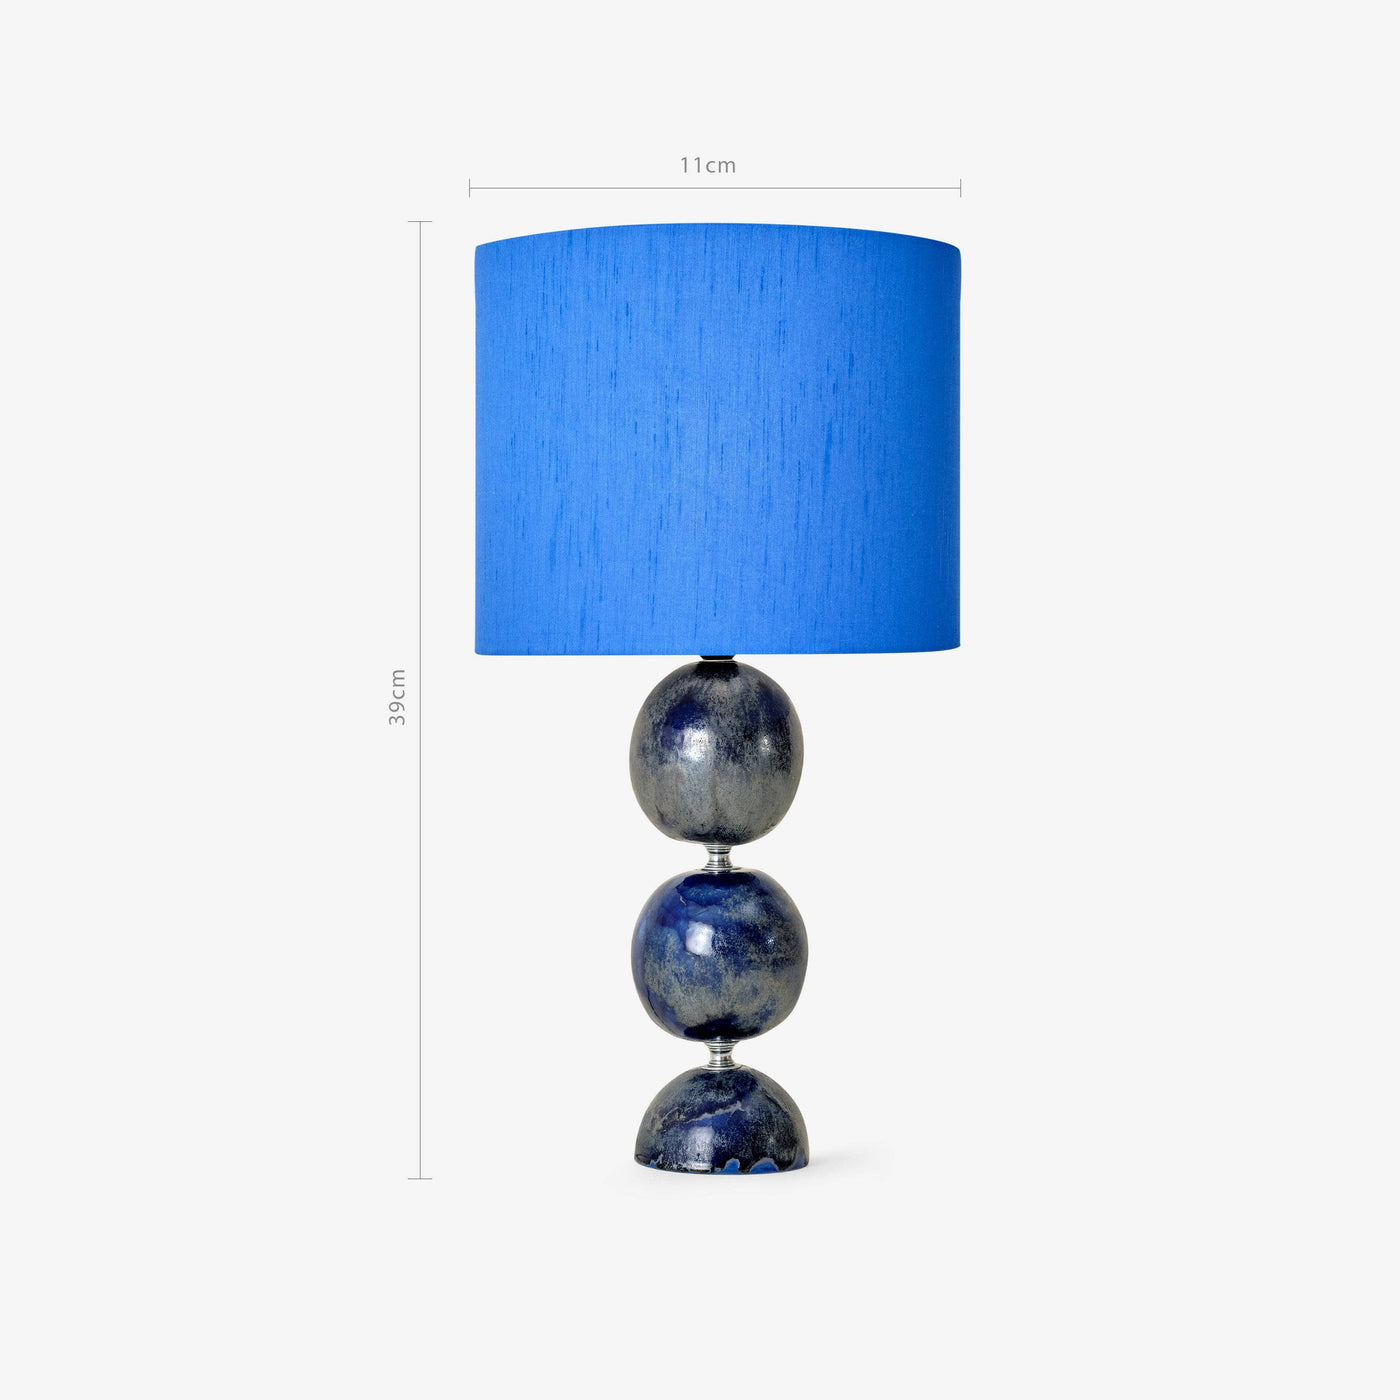 Trenza Ceramic Table Lamp, Blue Table & Bedside Lamps sazy.com